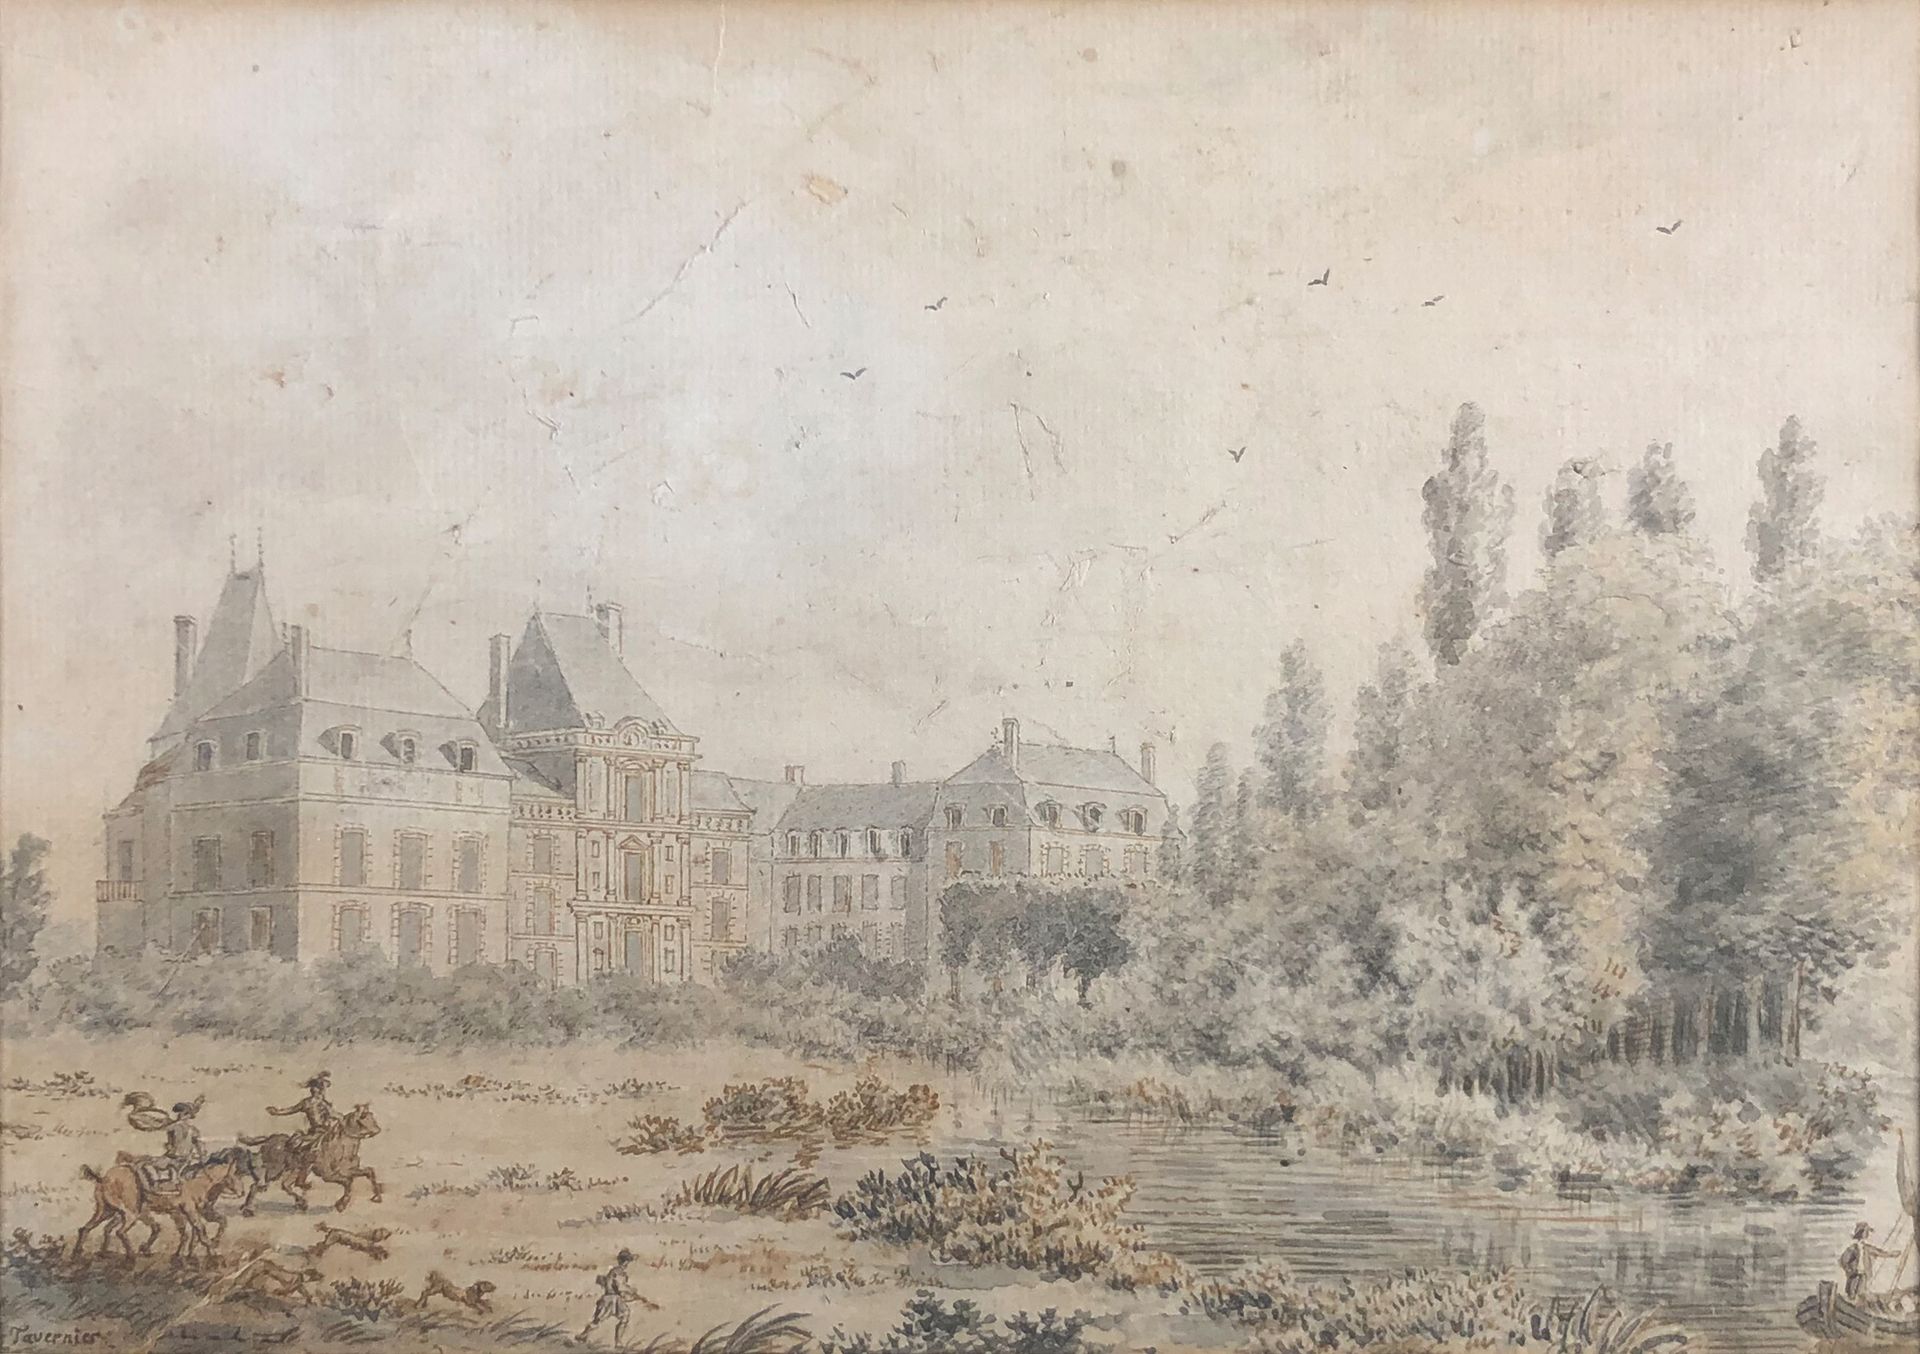 Null R.TAVERNIER DE JUNQUIERES (1742 -) (归属)

在一座城堡周围狩猎。

左下角有墨水、水墨和棕褐色签名。

视图：1&hellip;